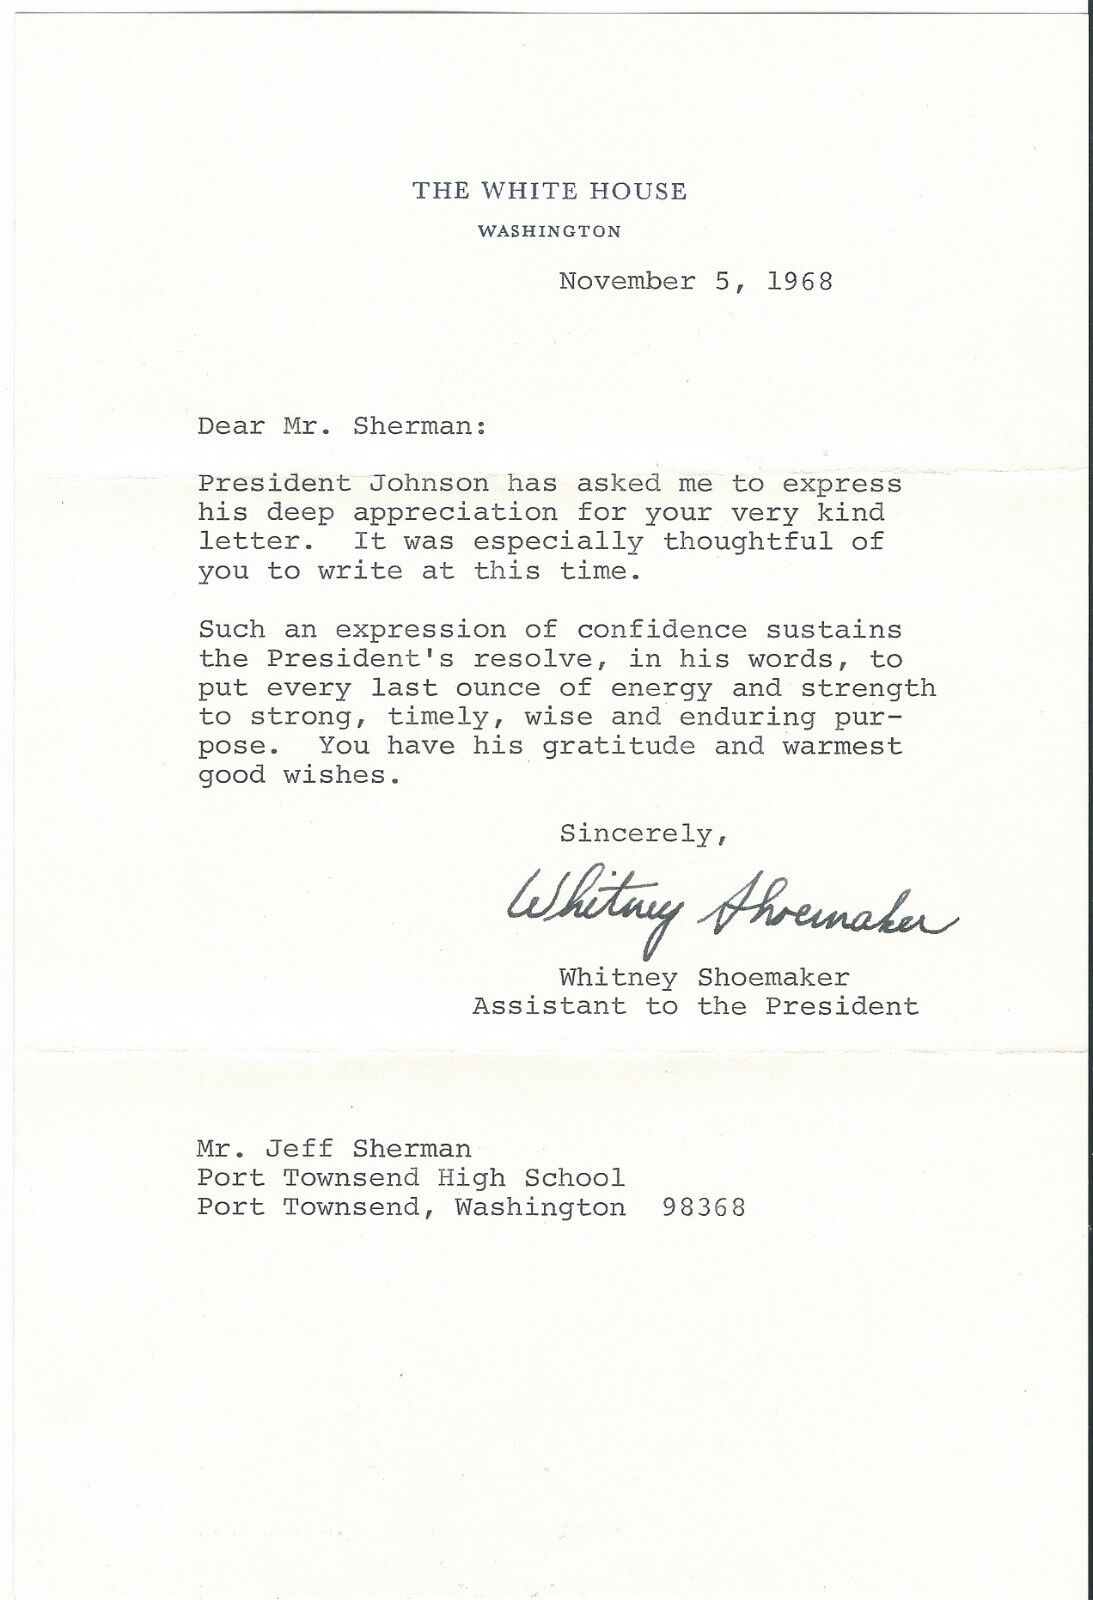 1968 Signed Letter From Personal Secretary Of President Johnson - Mint!!!